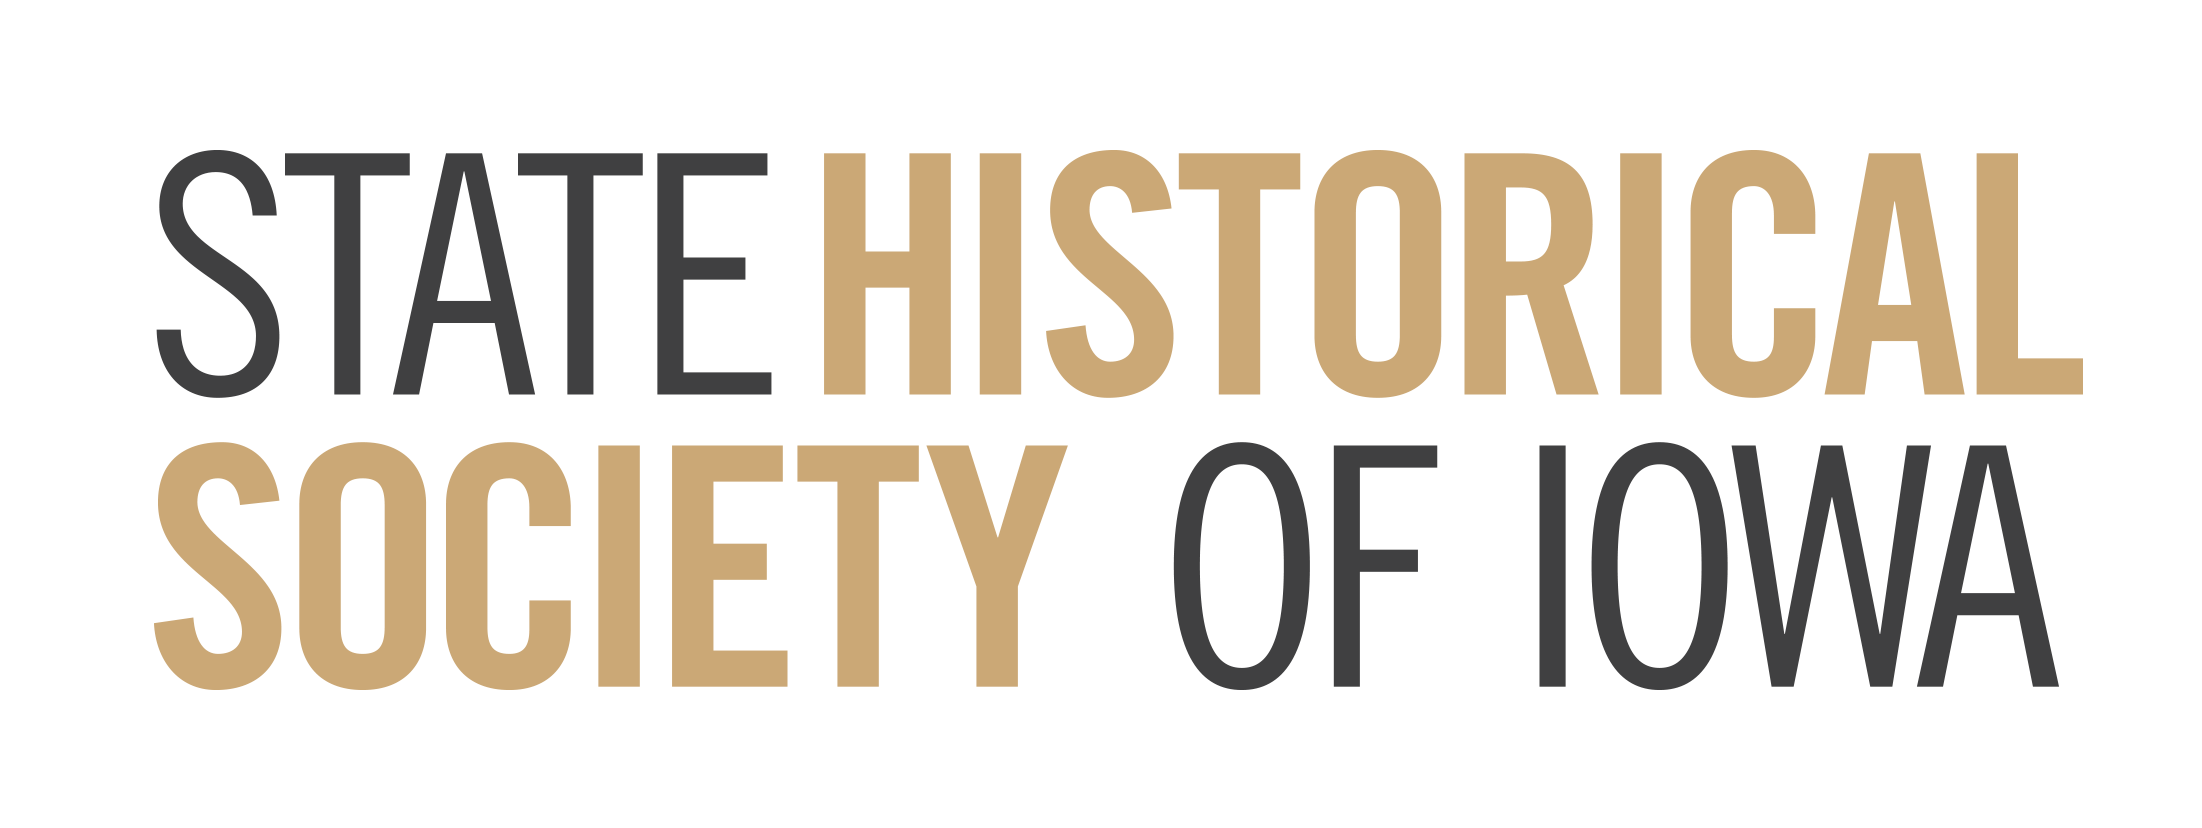 State Historical Society of Iowa logo